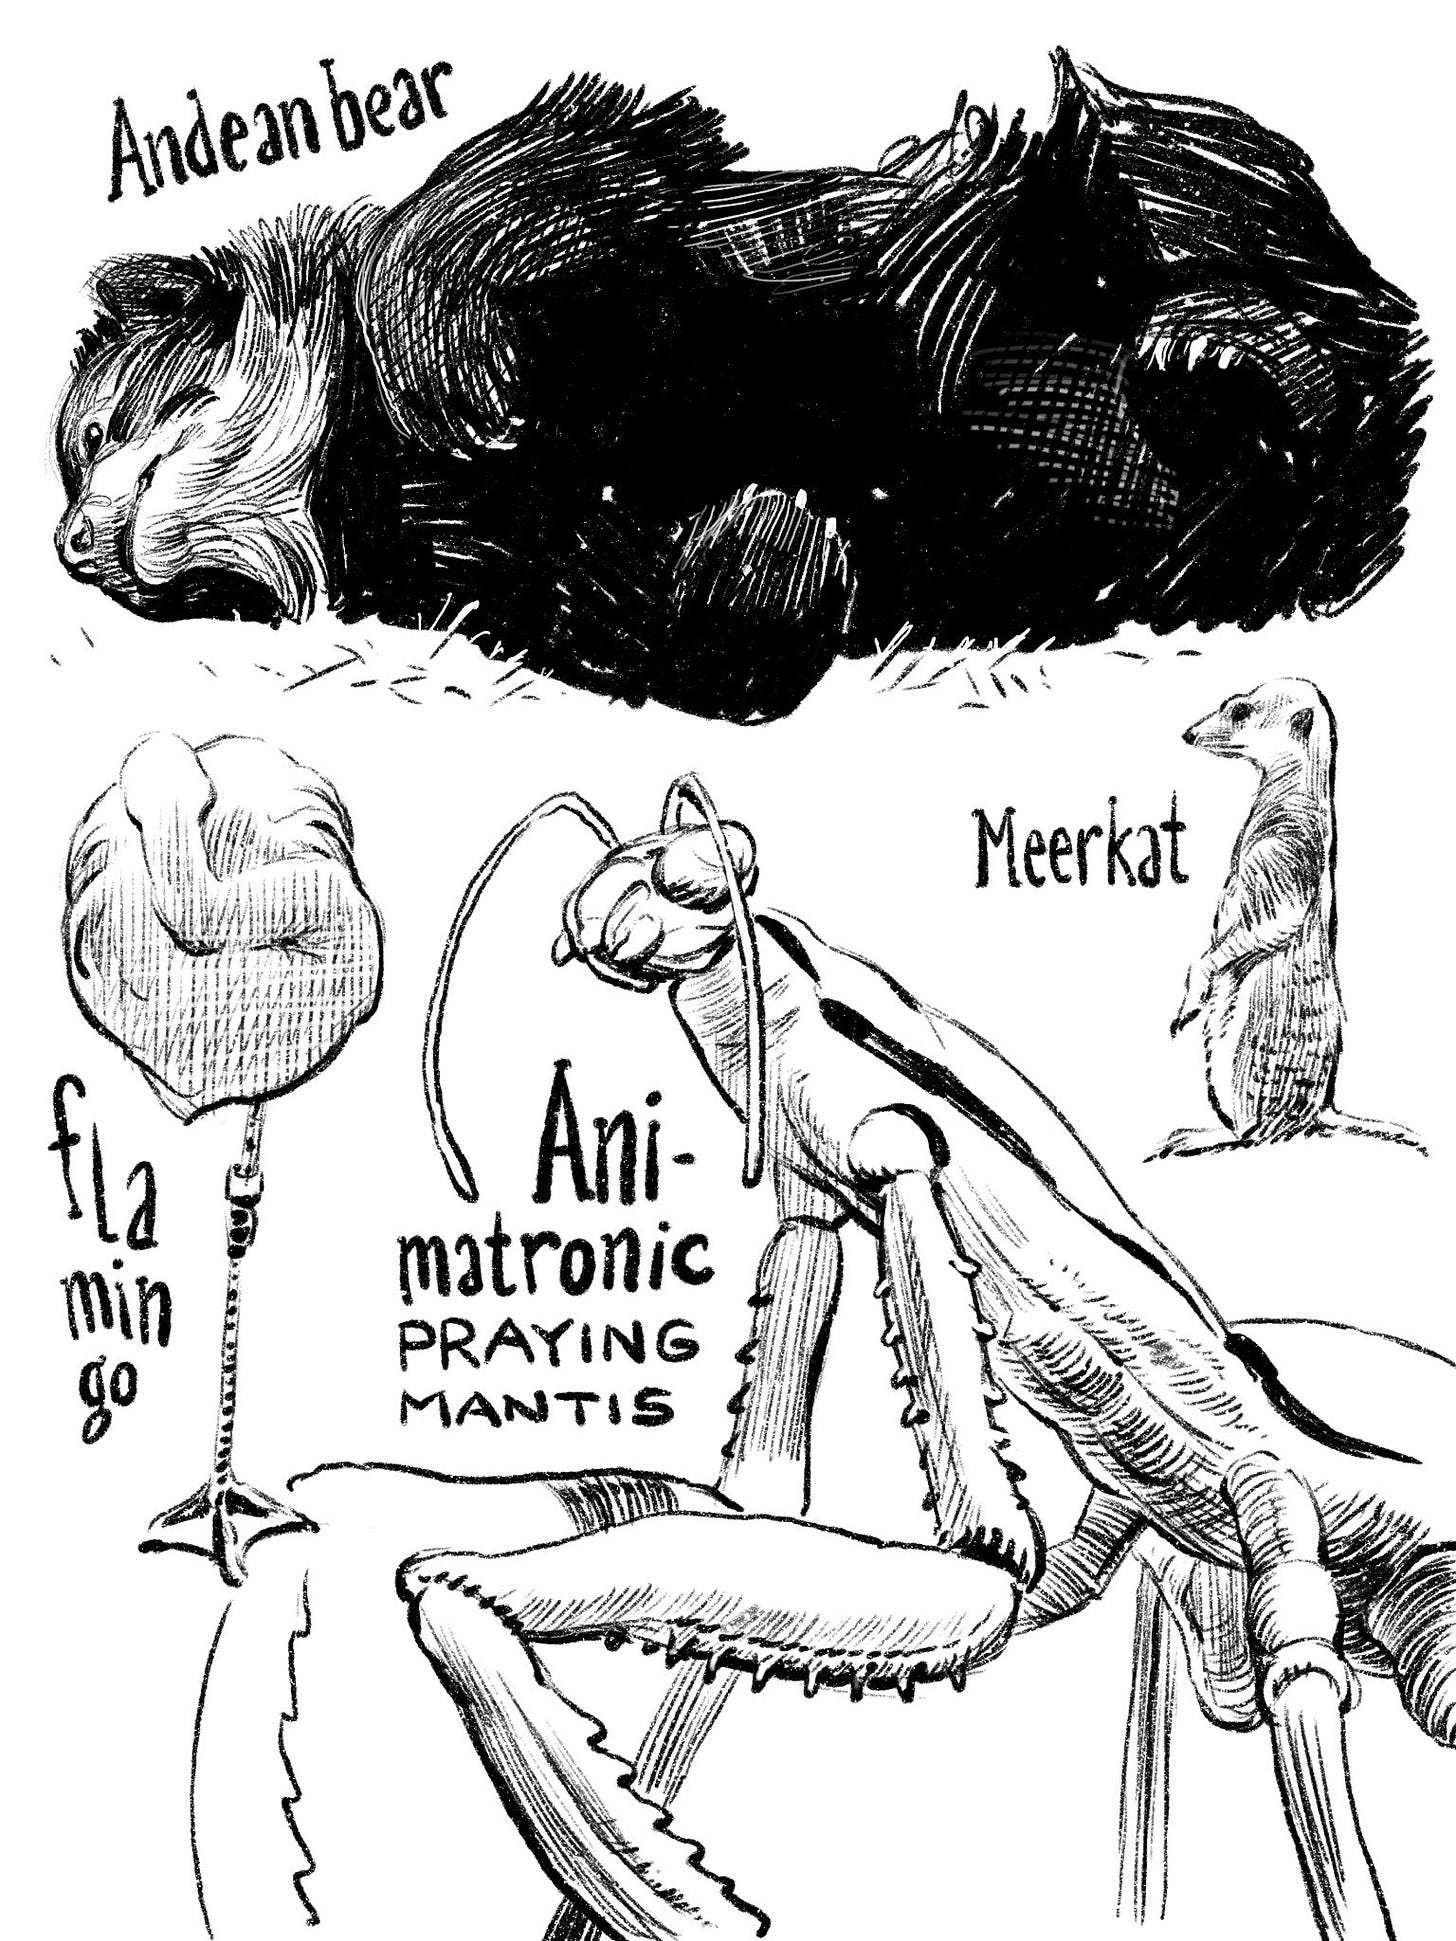 sketches of an Andean bear, a flamngo, a meerkat, and an animatronic praying mantis